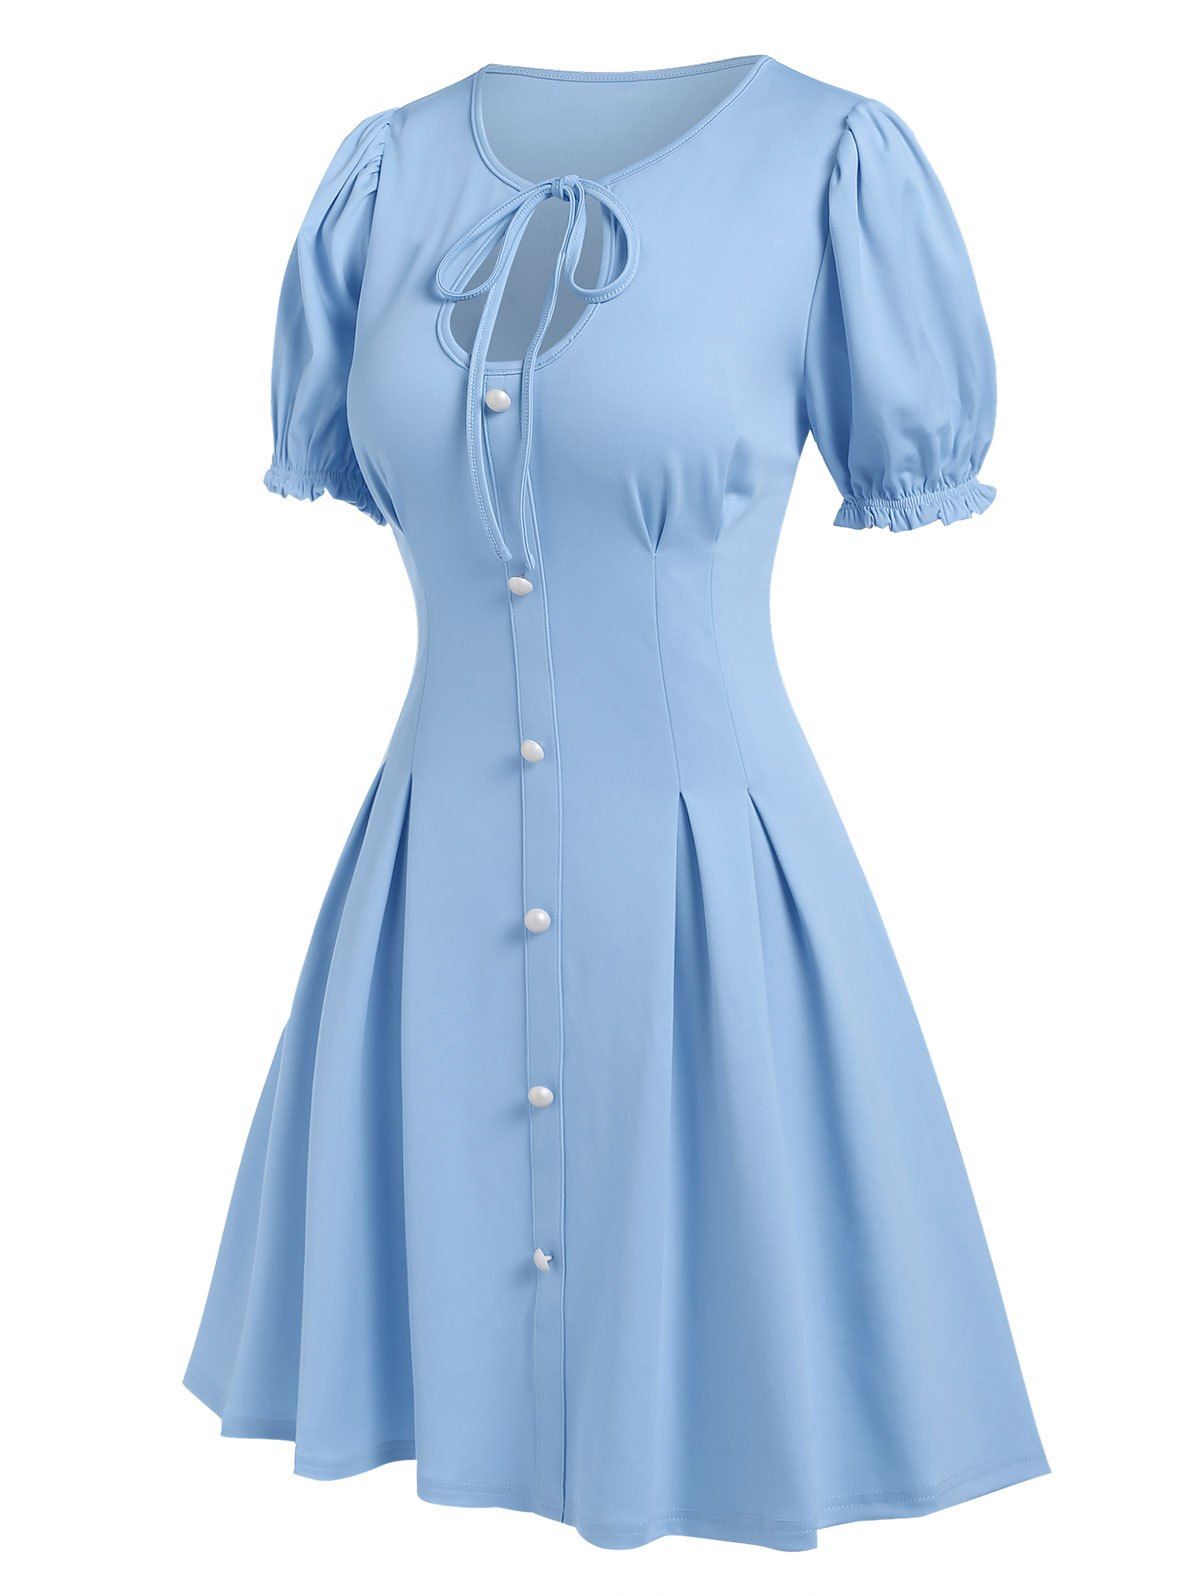 Vintage Dress Keyhole Front Tie Mini Dress Puff Sleeve Mock Button A Line Dress - LIGHT BLUE L